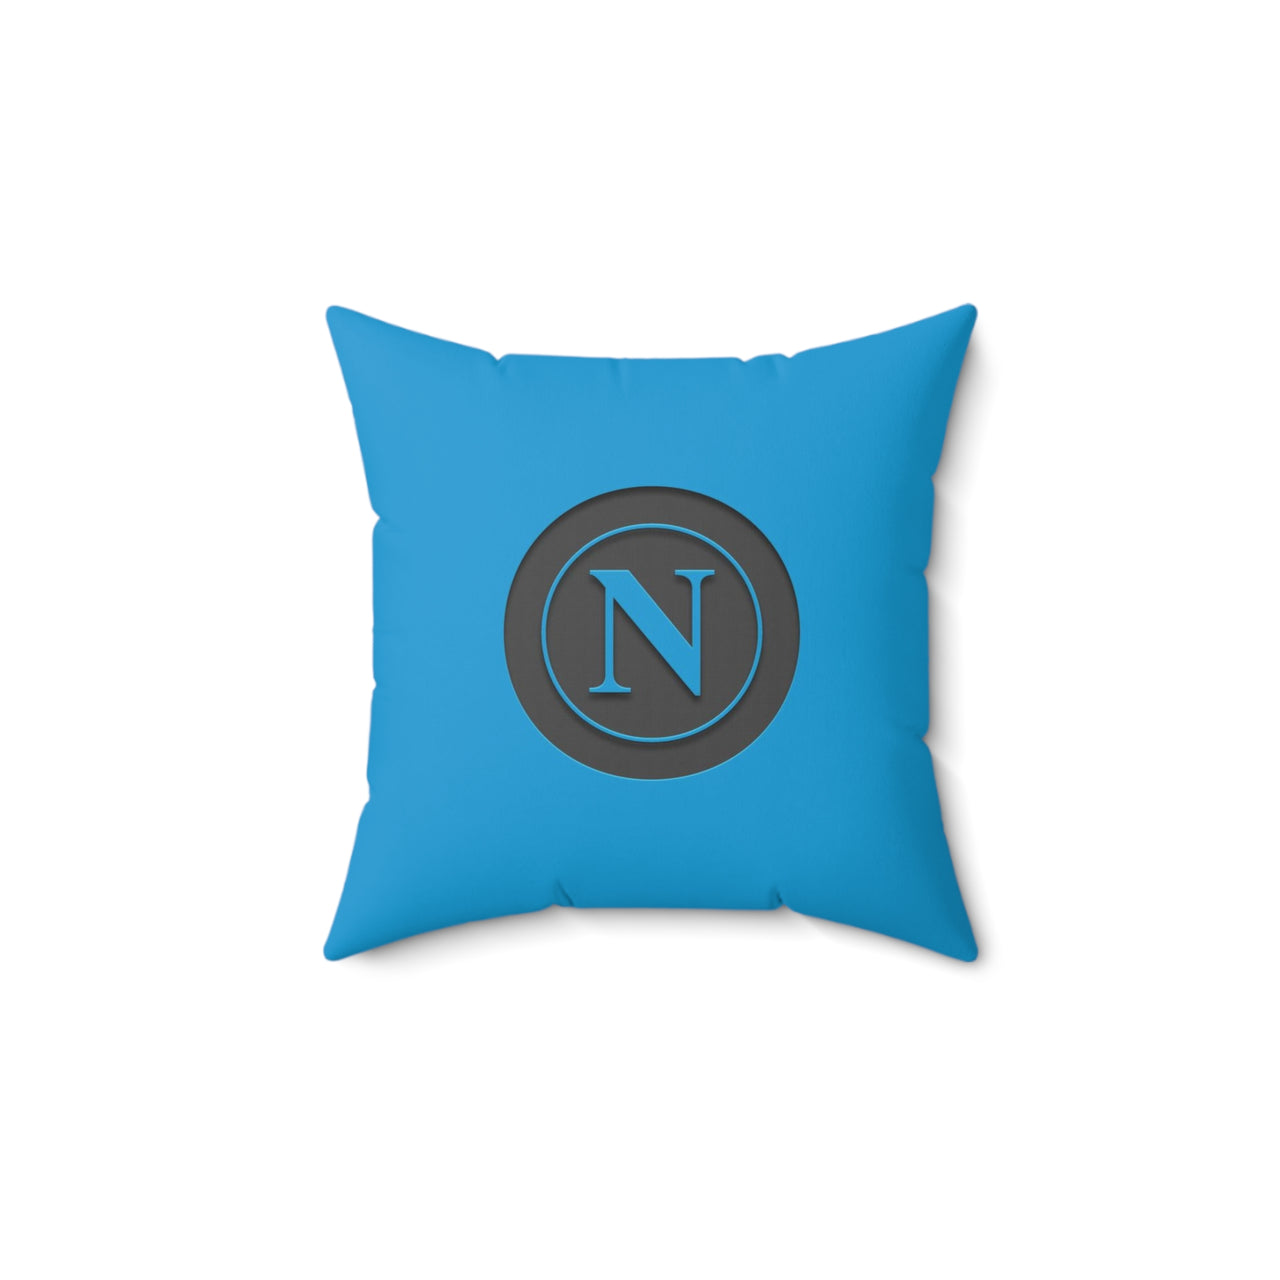 Napoli Square Pillow